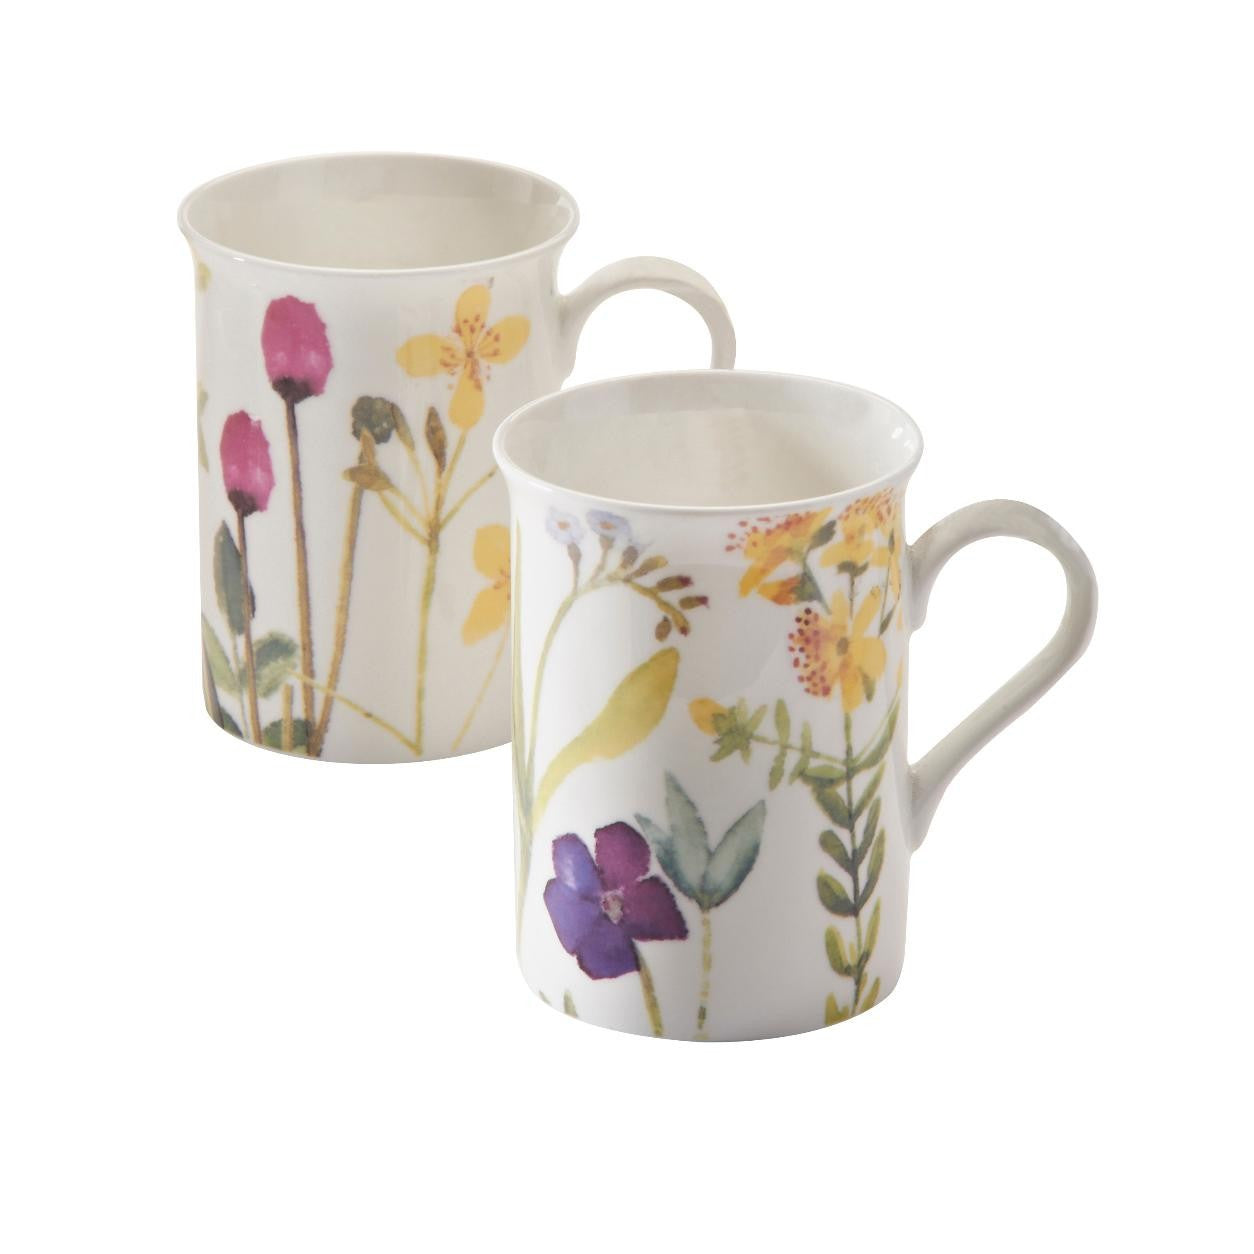 Price & Kensington 0043.006 Bone China Mug - Bloom Pkt1 - Premium Mugs from Price & Kensington - Just $5.3! Shop now at W Hurst & Son (IW) Ltd